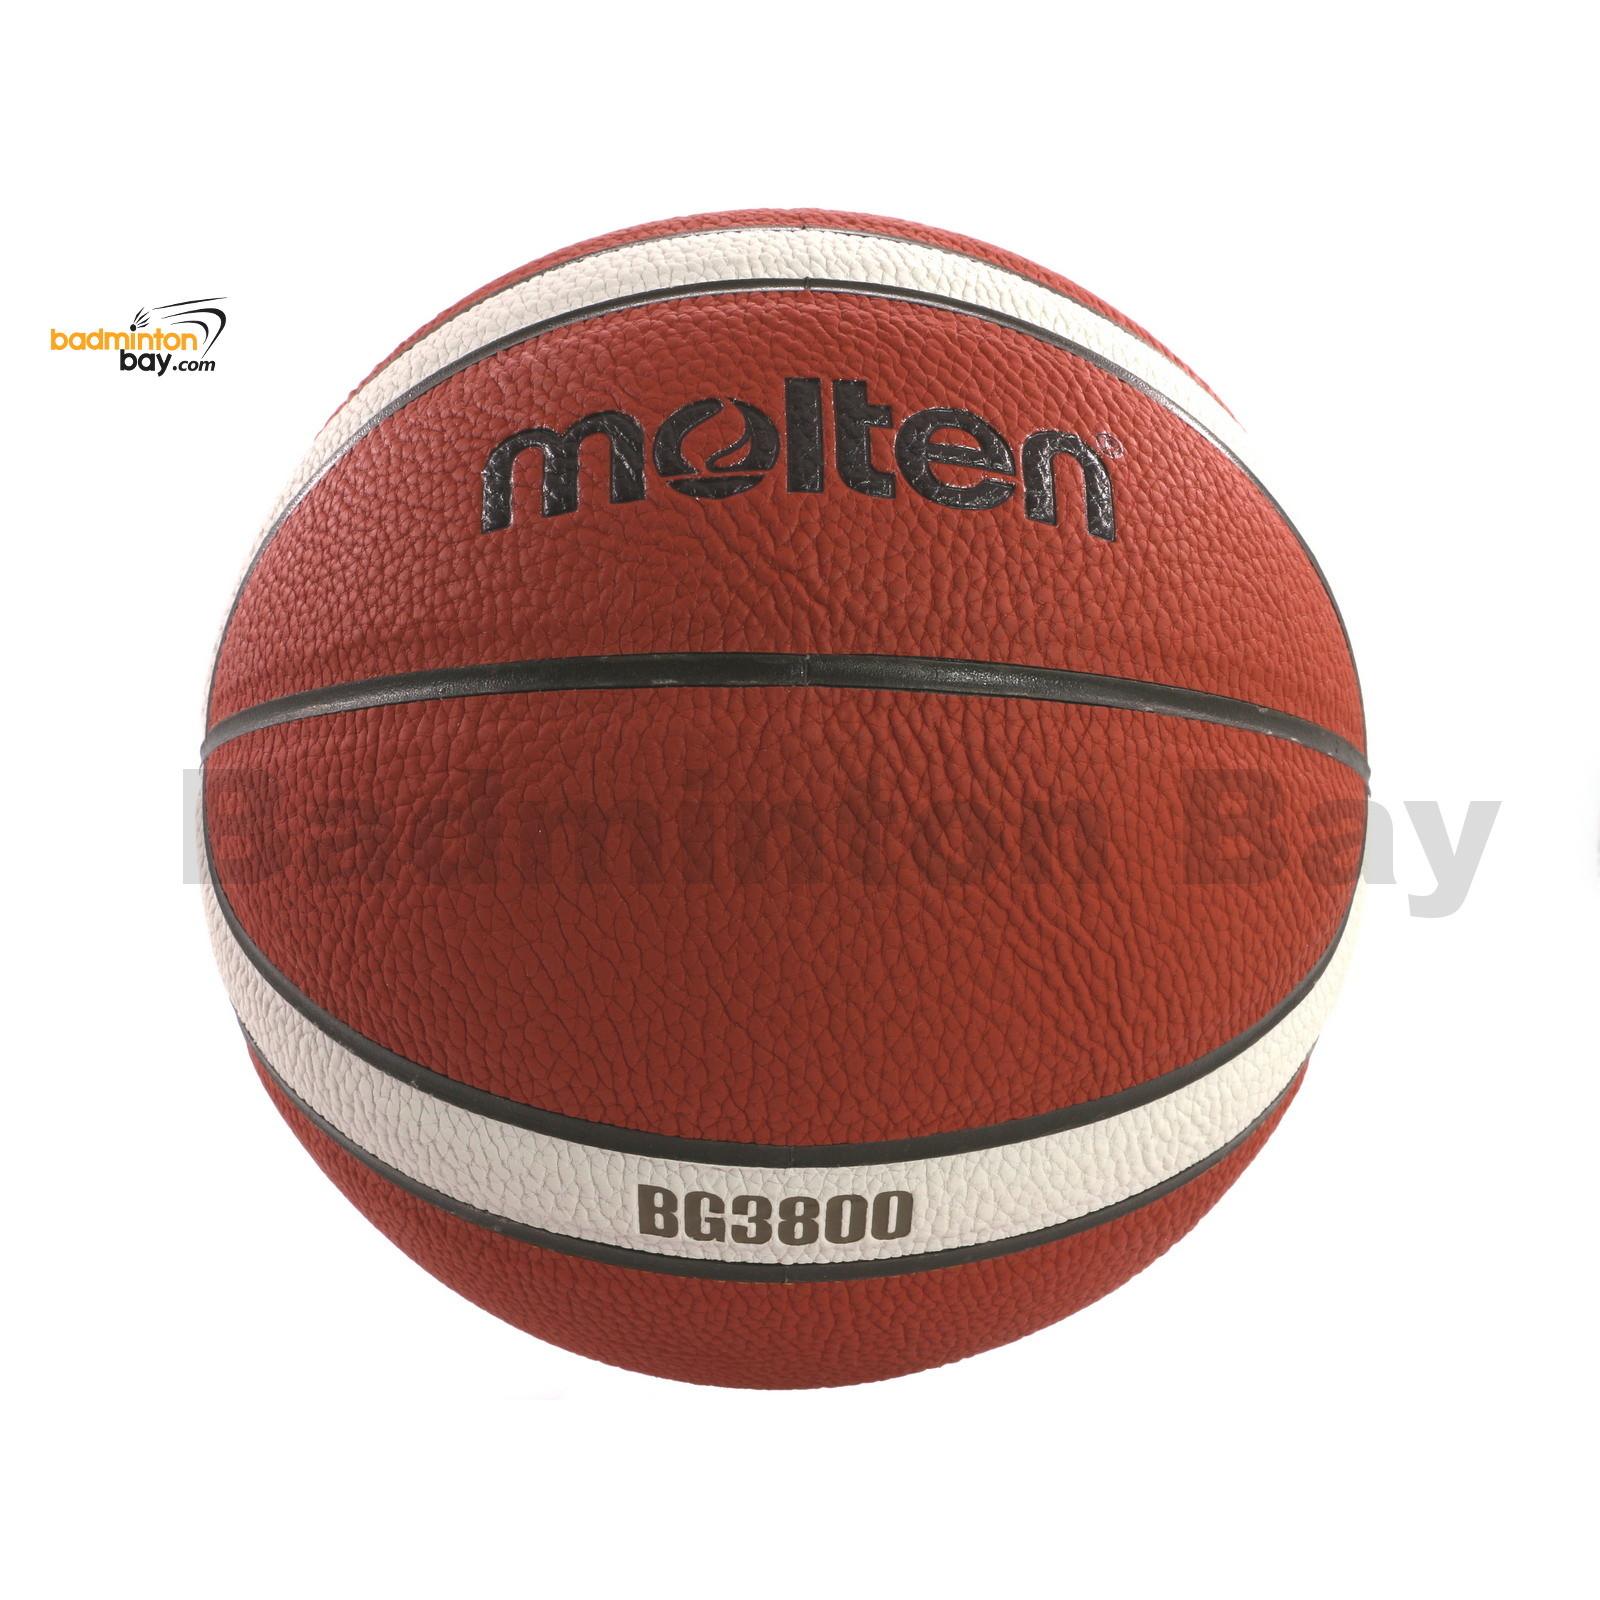 molten BG38000 M9C indoor outdoor Basketball FIBA Synthetik Leder Größe 7 World 